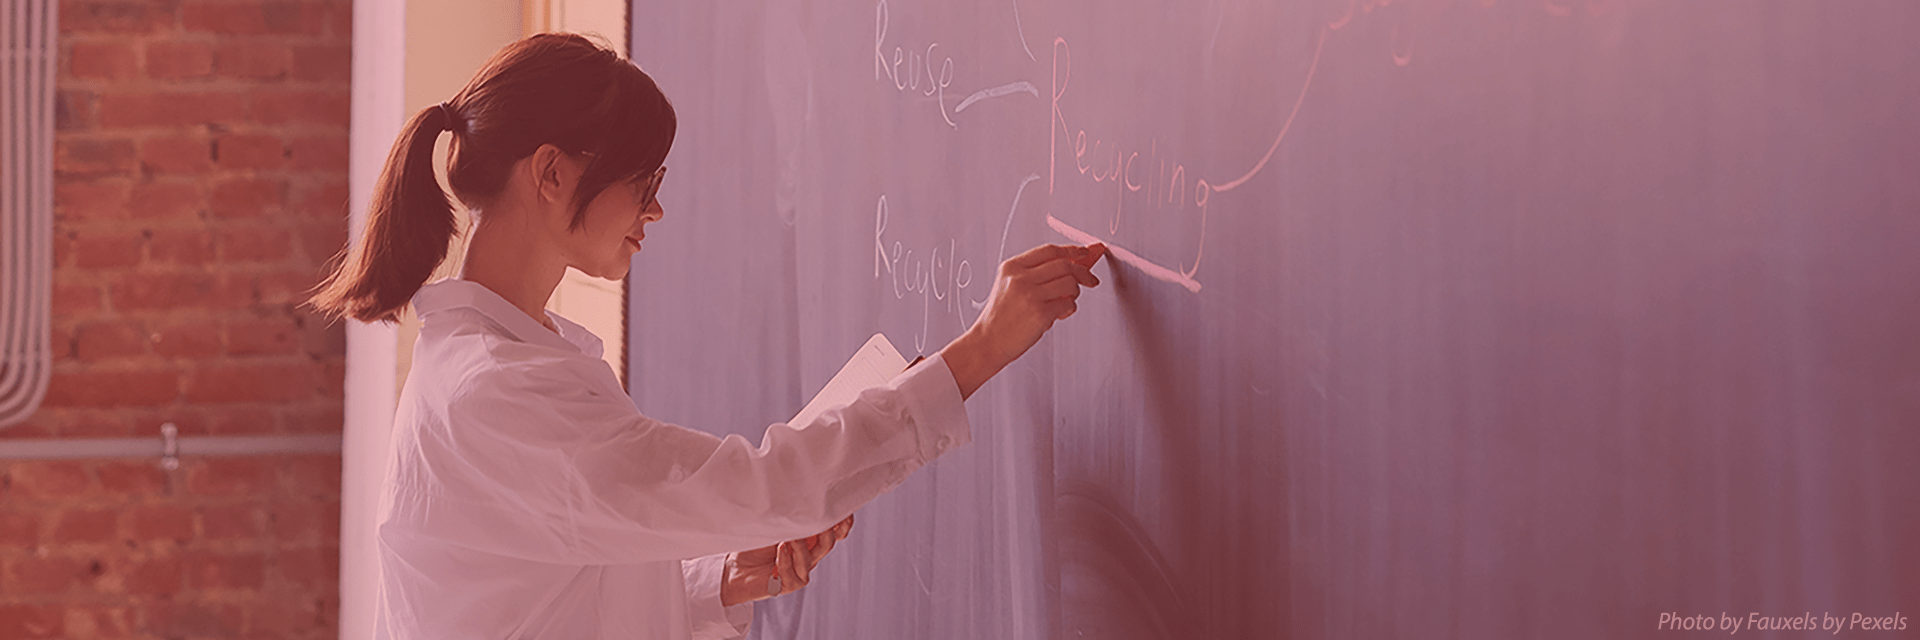 Female instructor writing on chalkboard